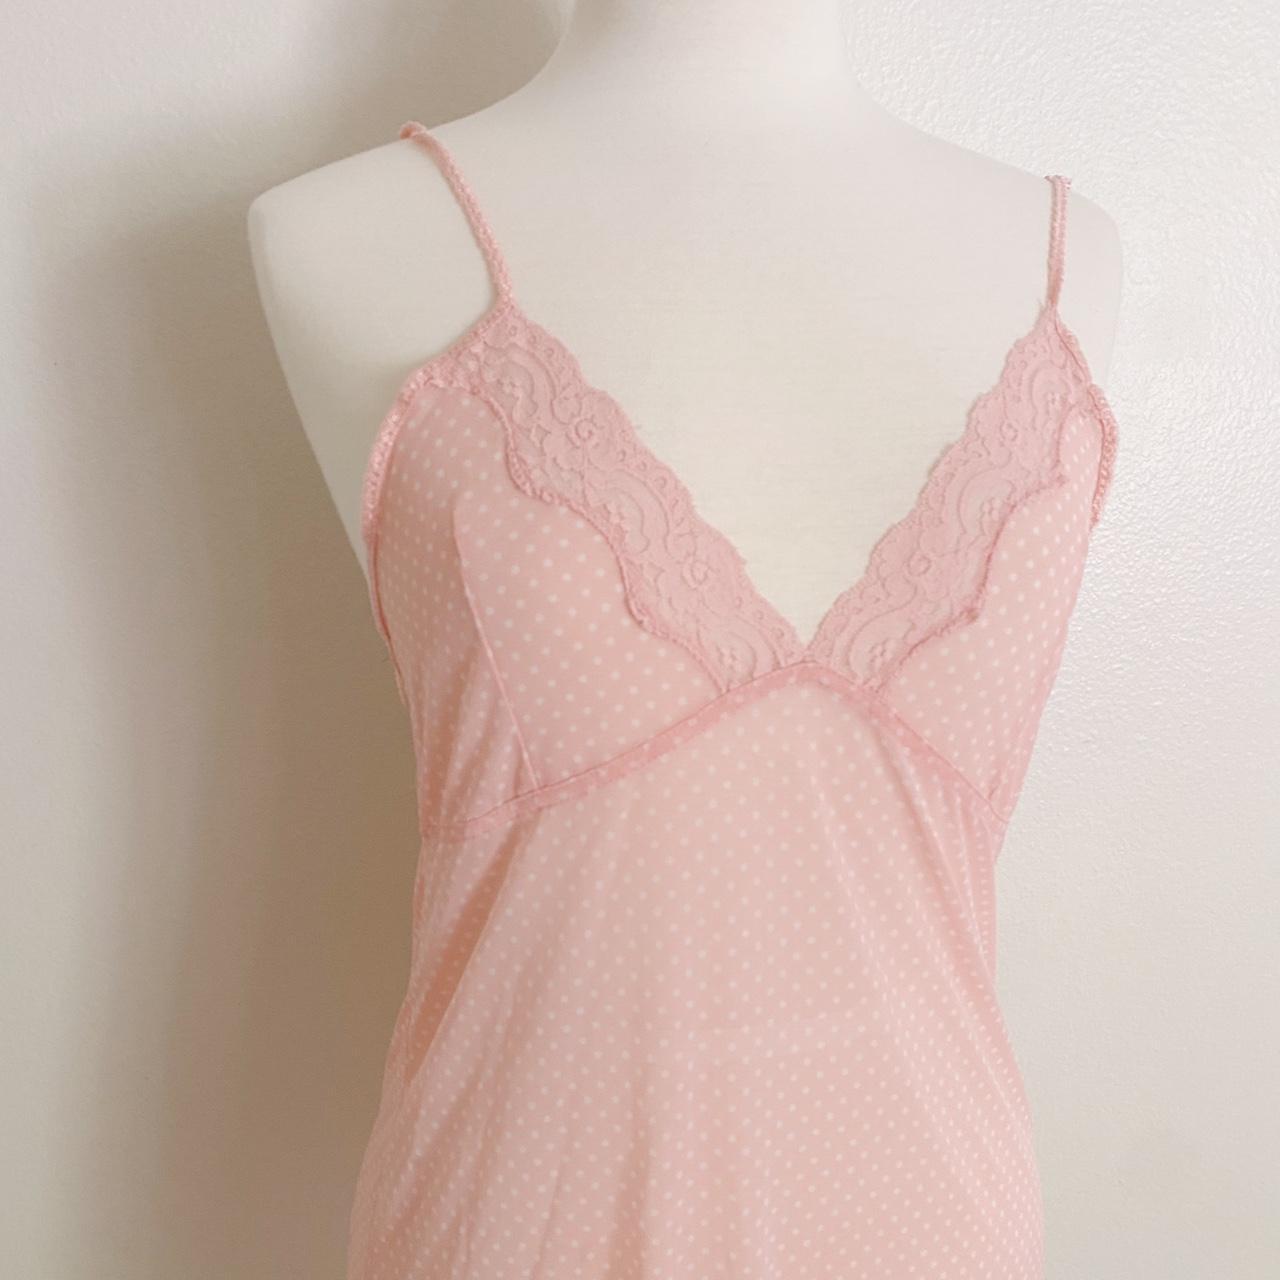 Product Image 2 - Rampage baby pink slip dress

Super